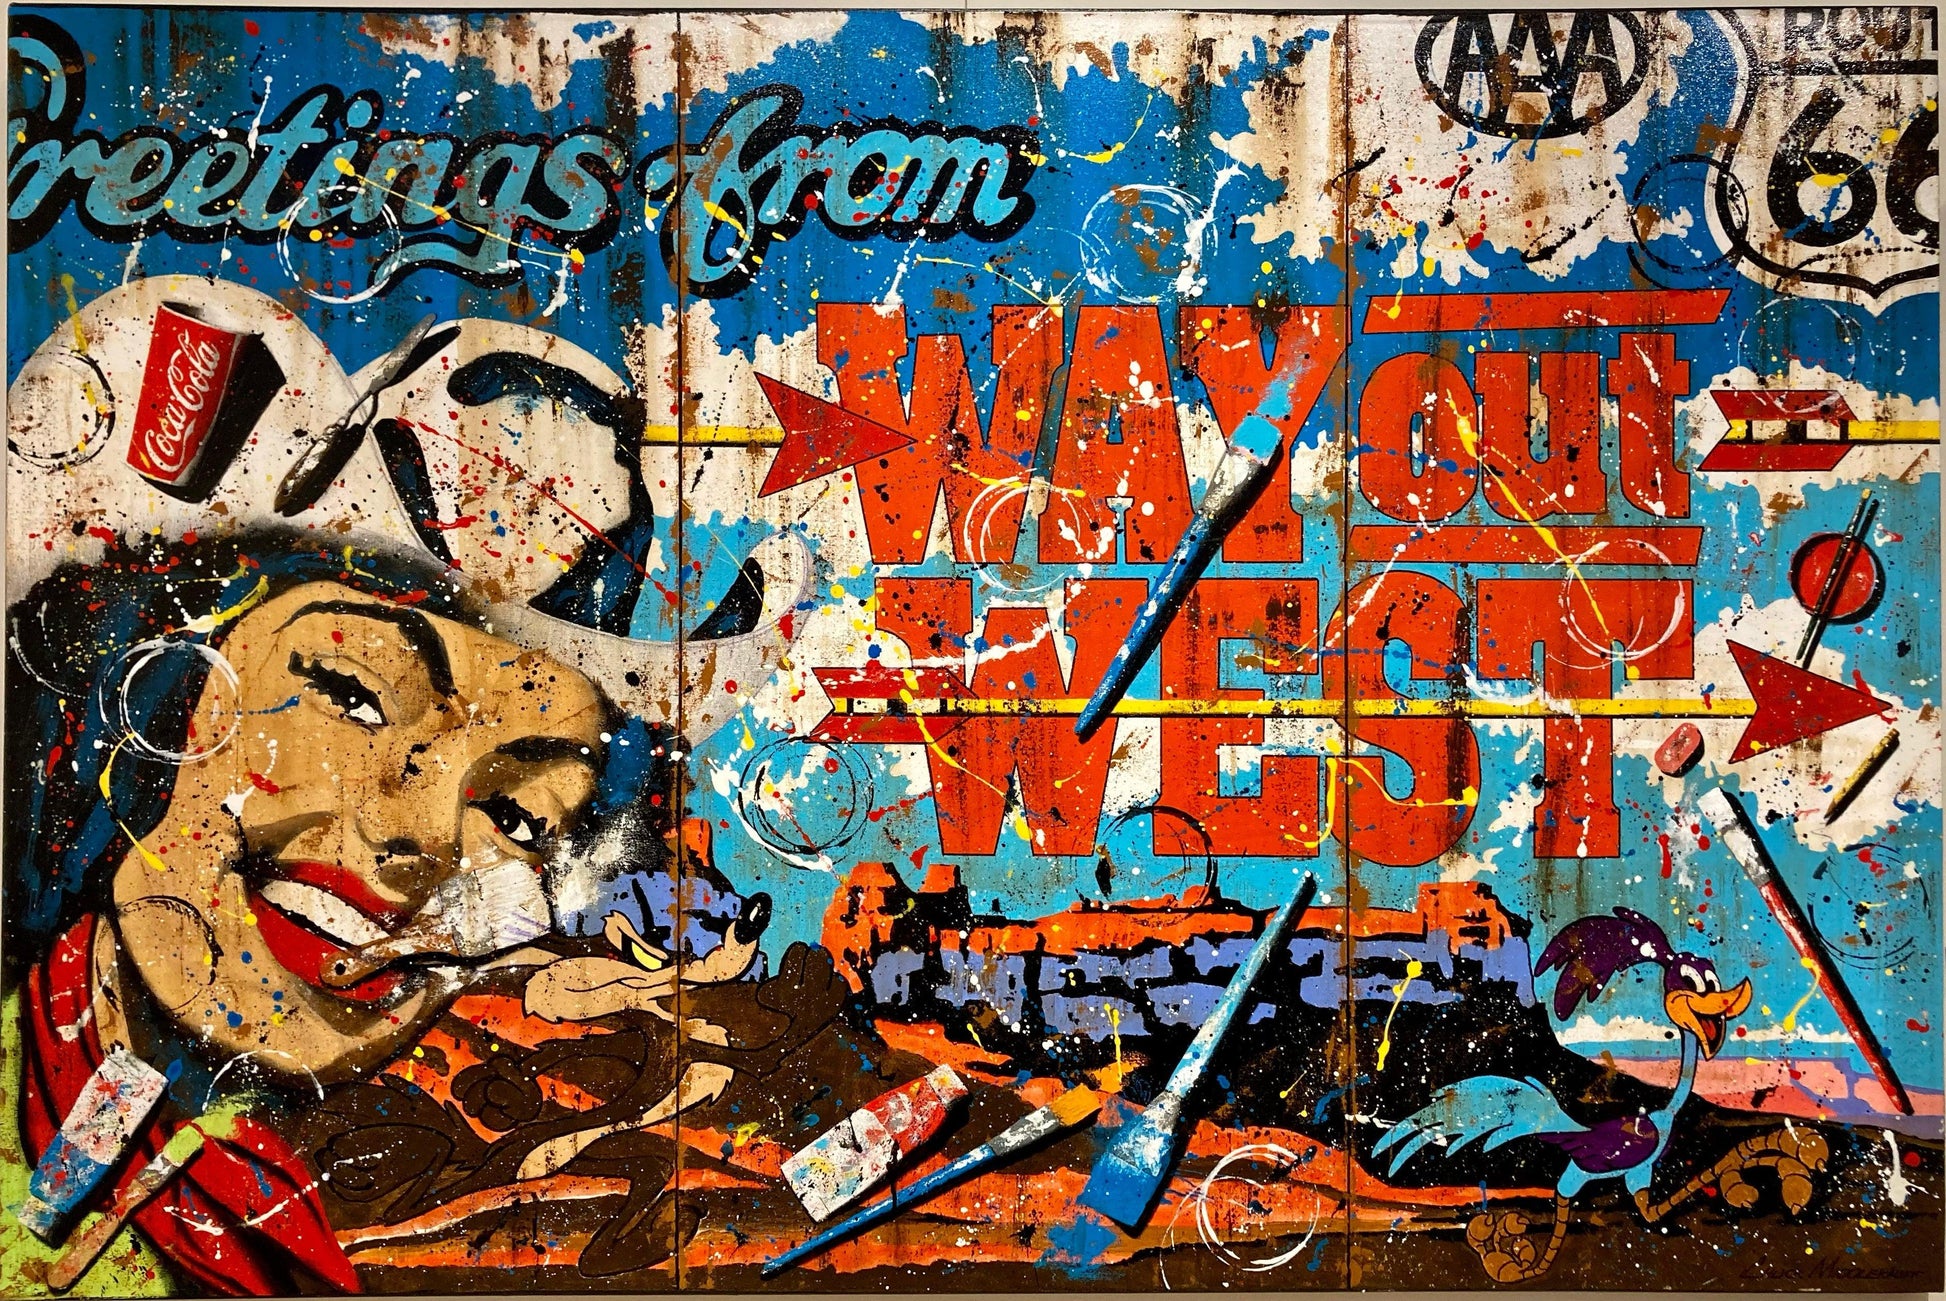 The Wacky Wild West Roadshow-Painting-Chuck Middlekauff-Sorrel Sky Gallery